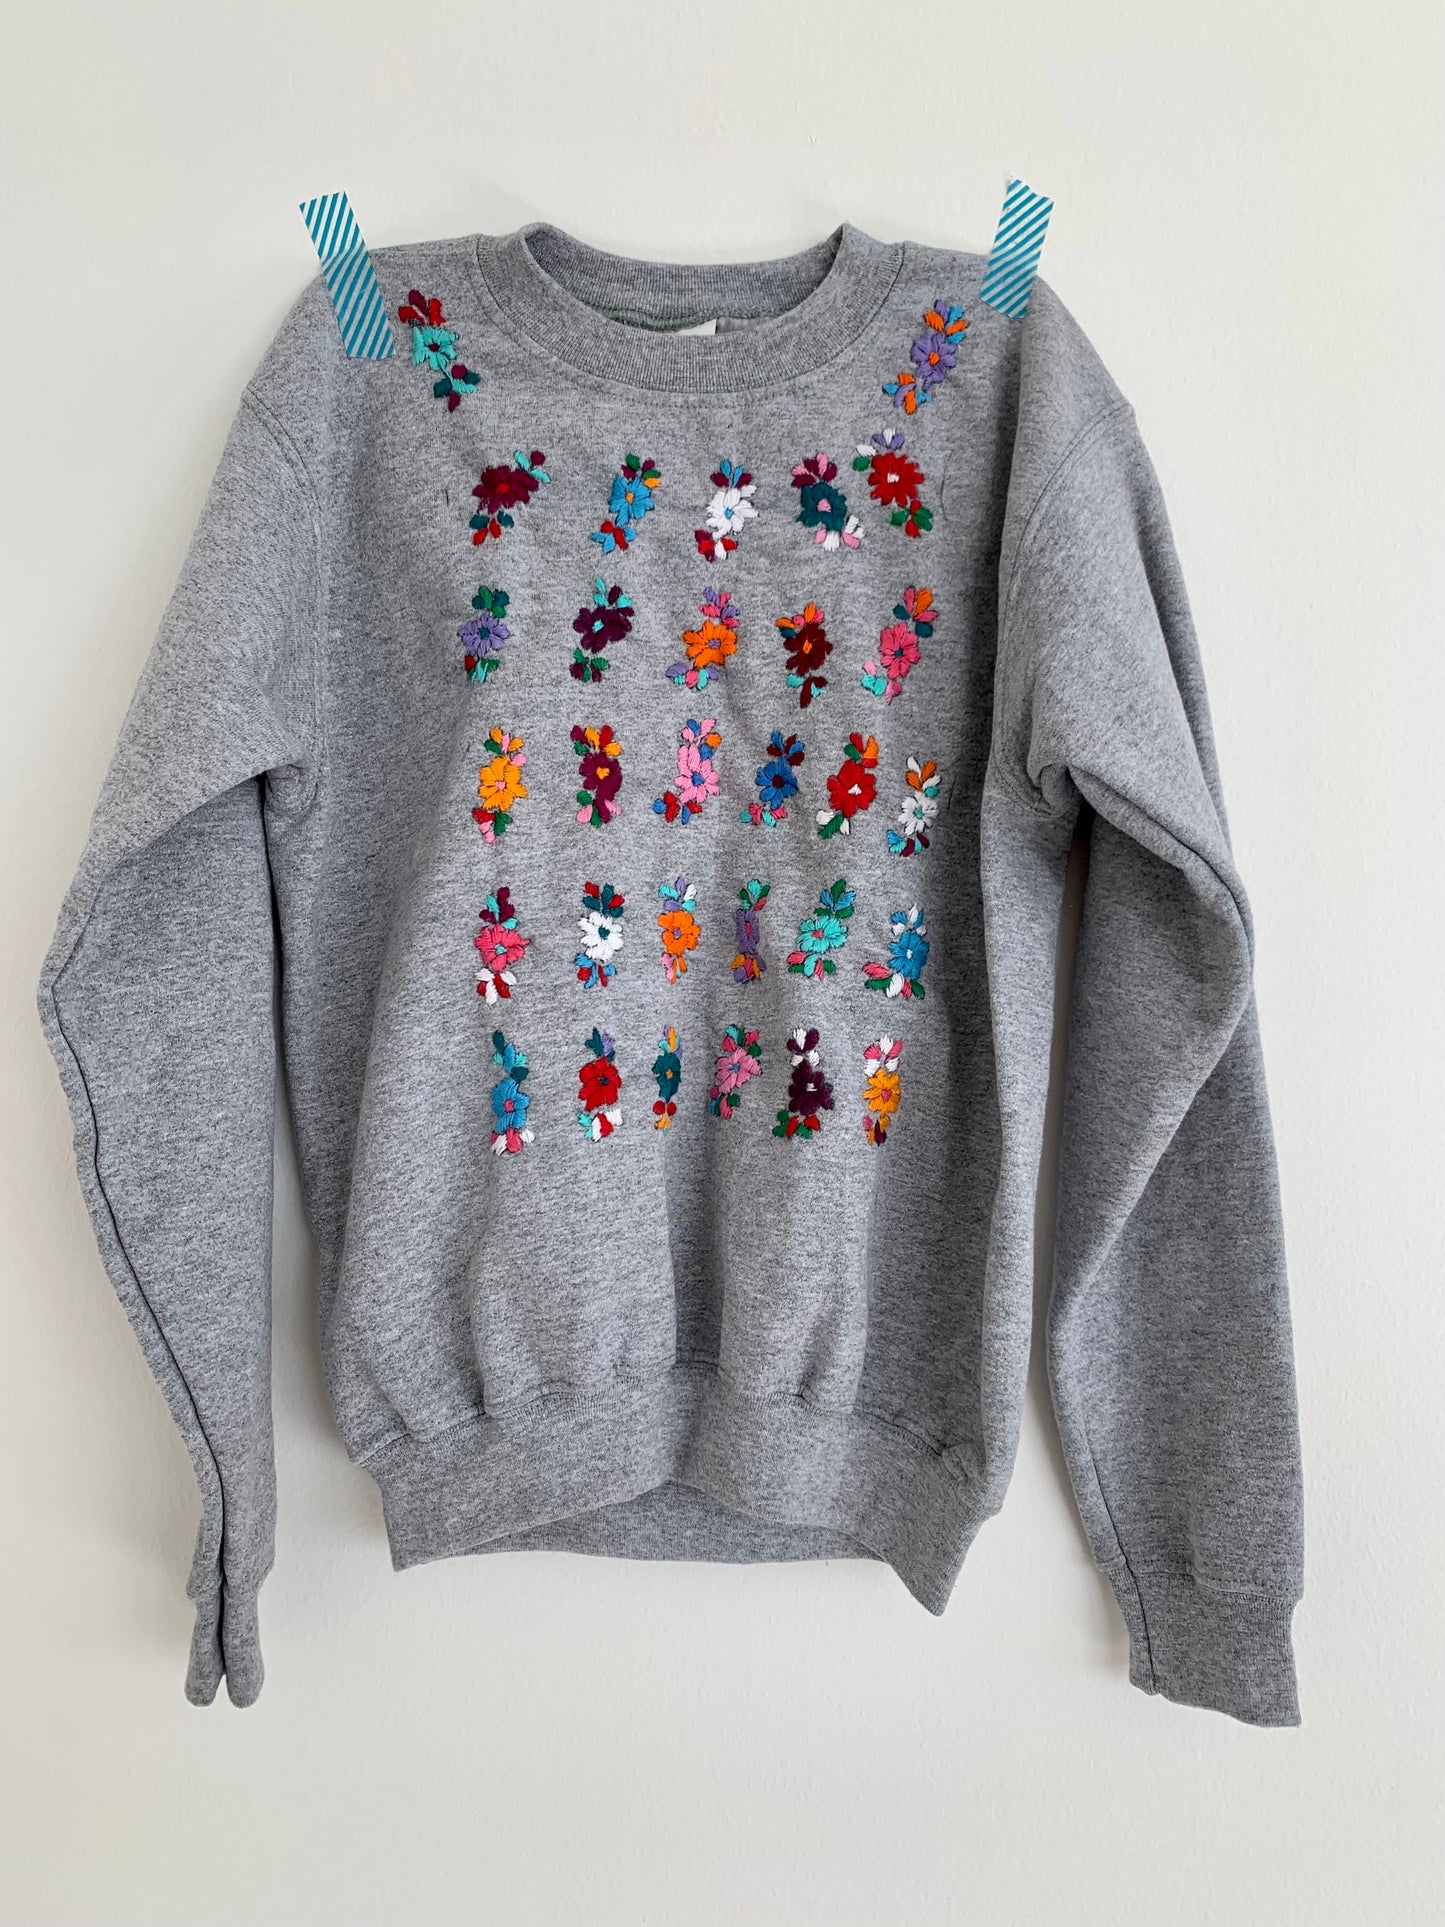 Kids hand embroidered floral sweatshirt